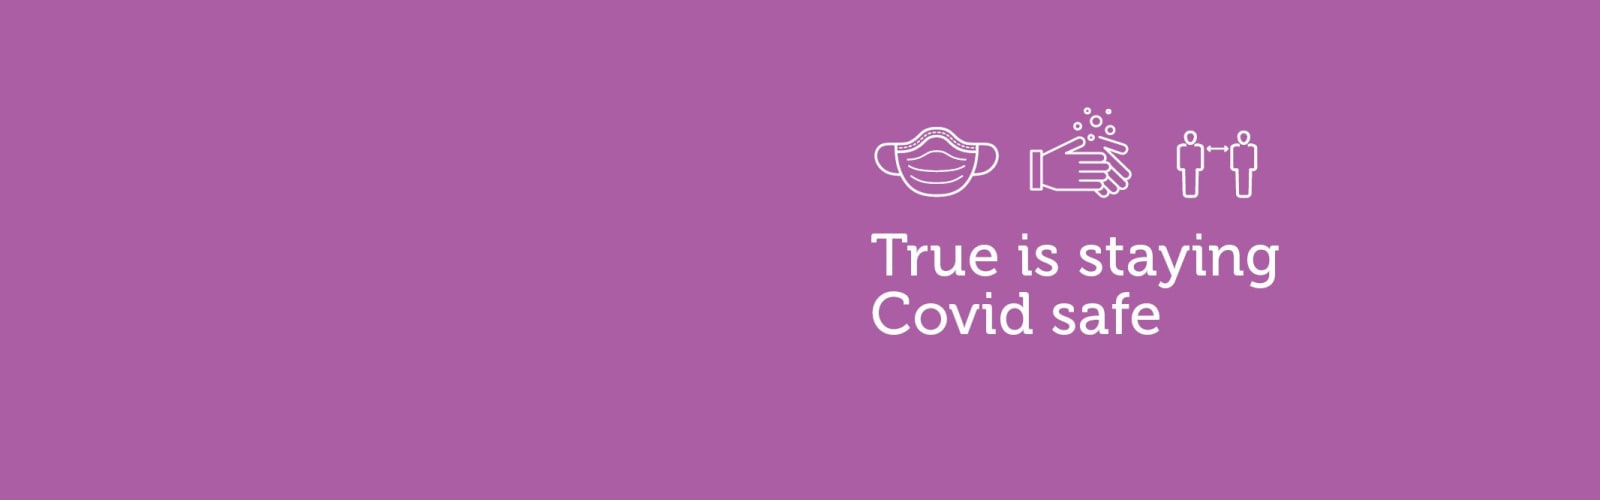 Latest Covid-19 Update